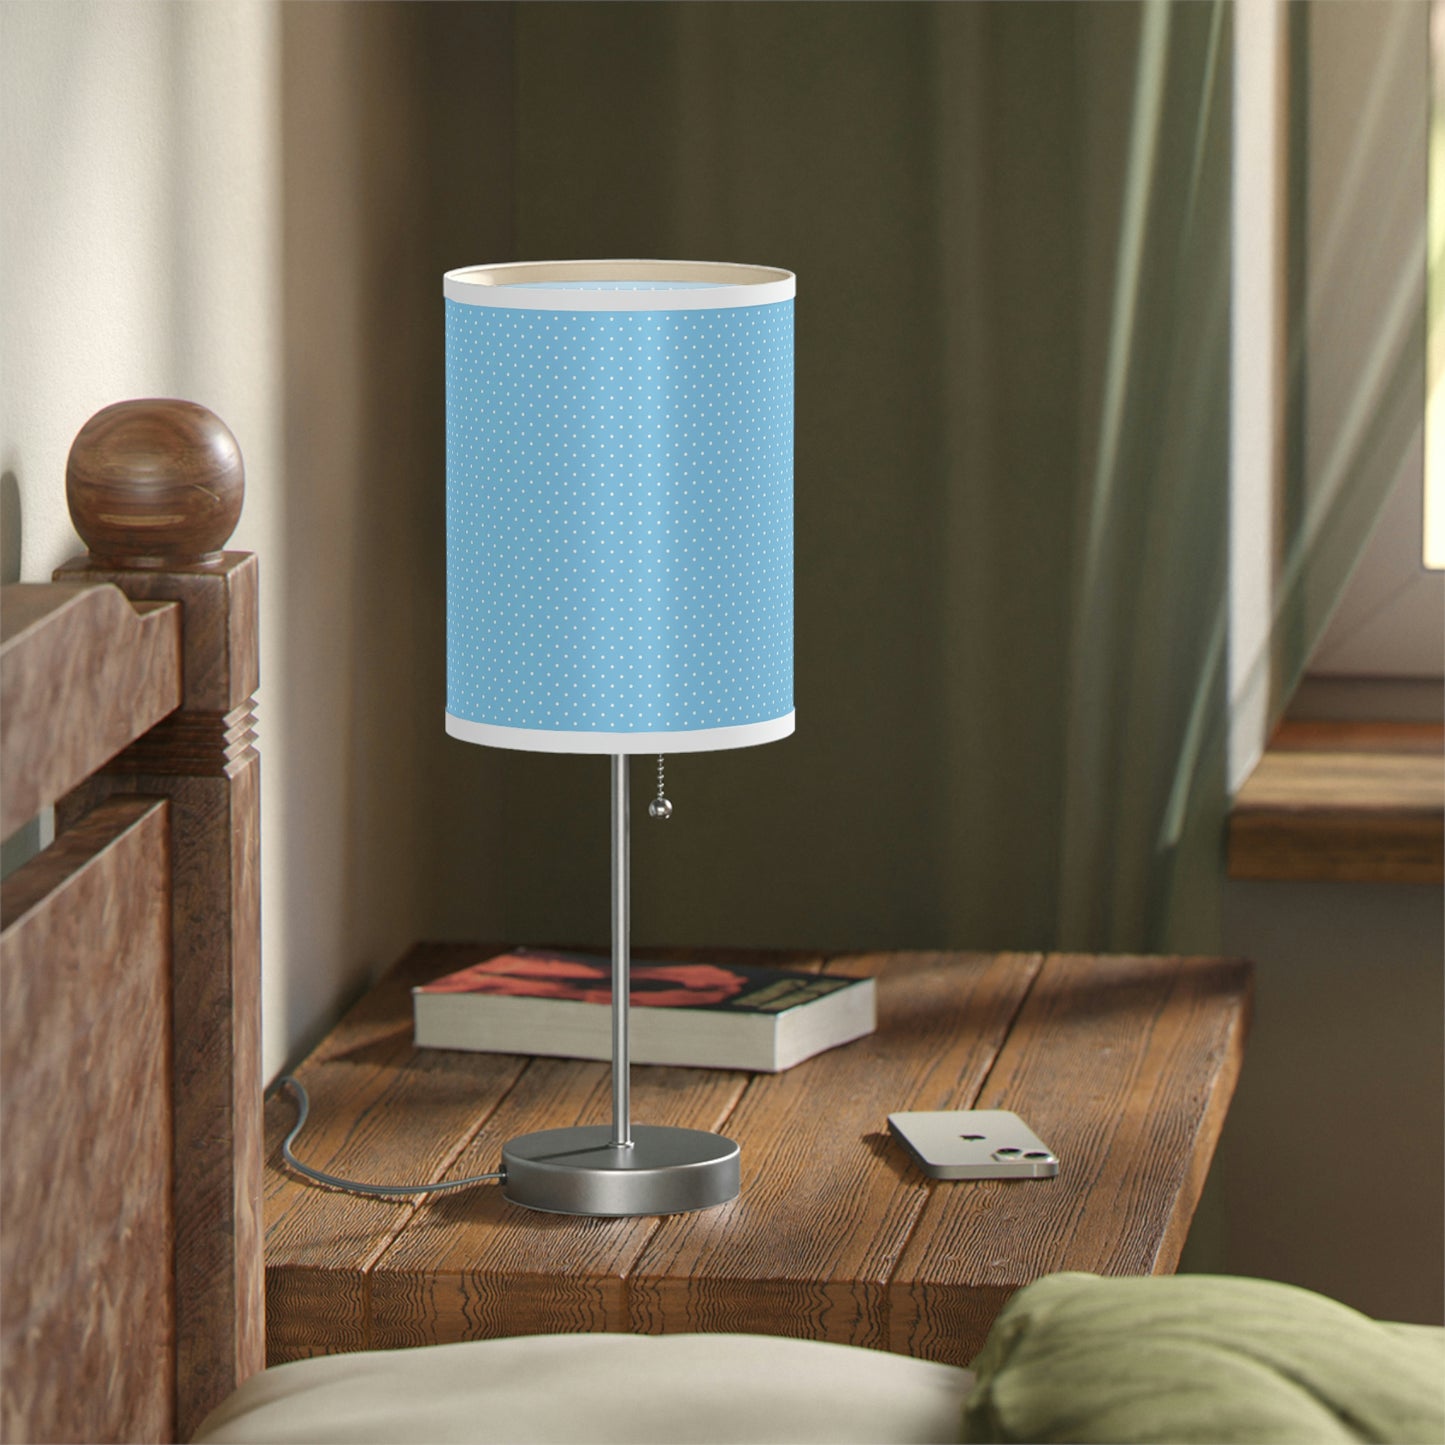 polka dot blue nursery table lamp, blue polka dot nursery lamp